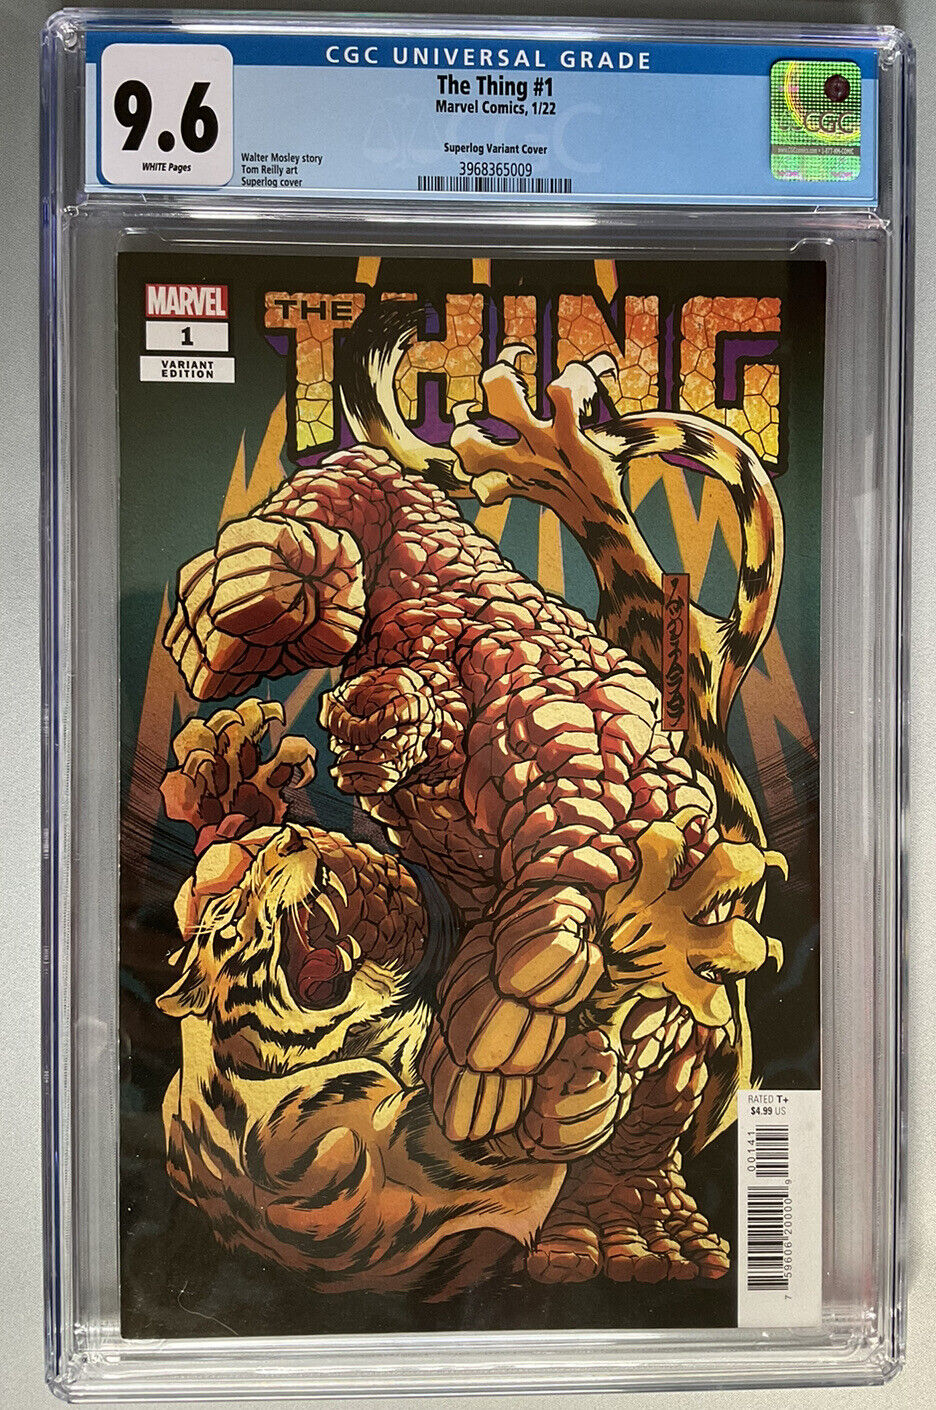 Marvel Comics The Thing #1 - Superlog Variant Cover - CGC 9.6 - NM+